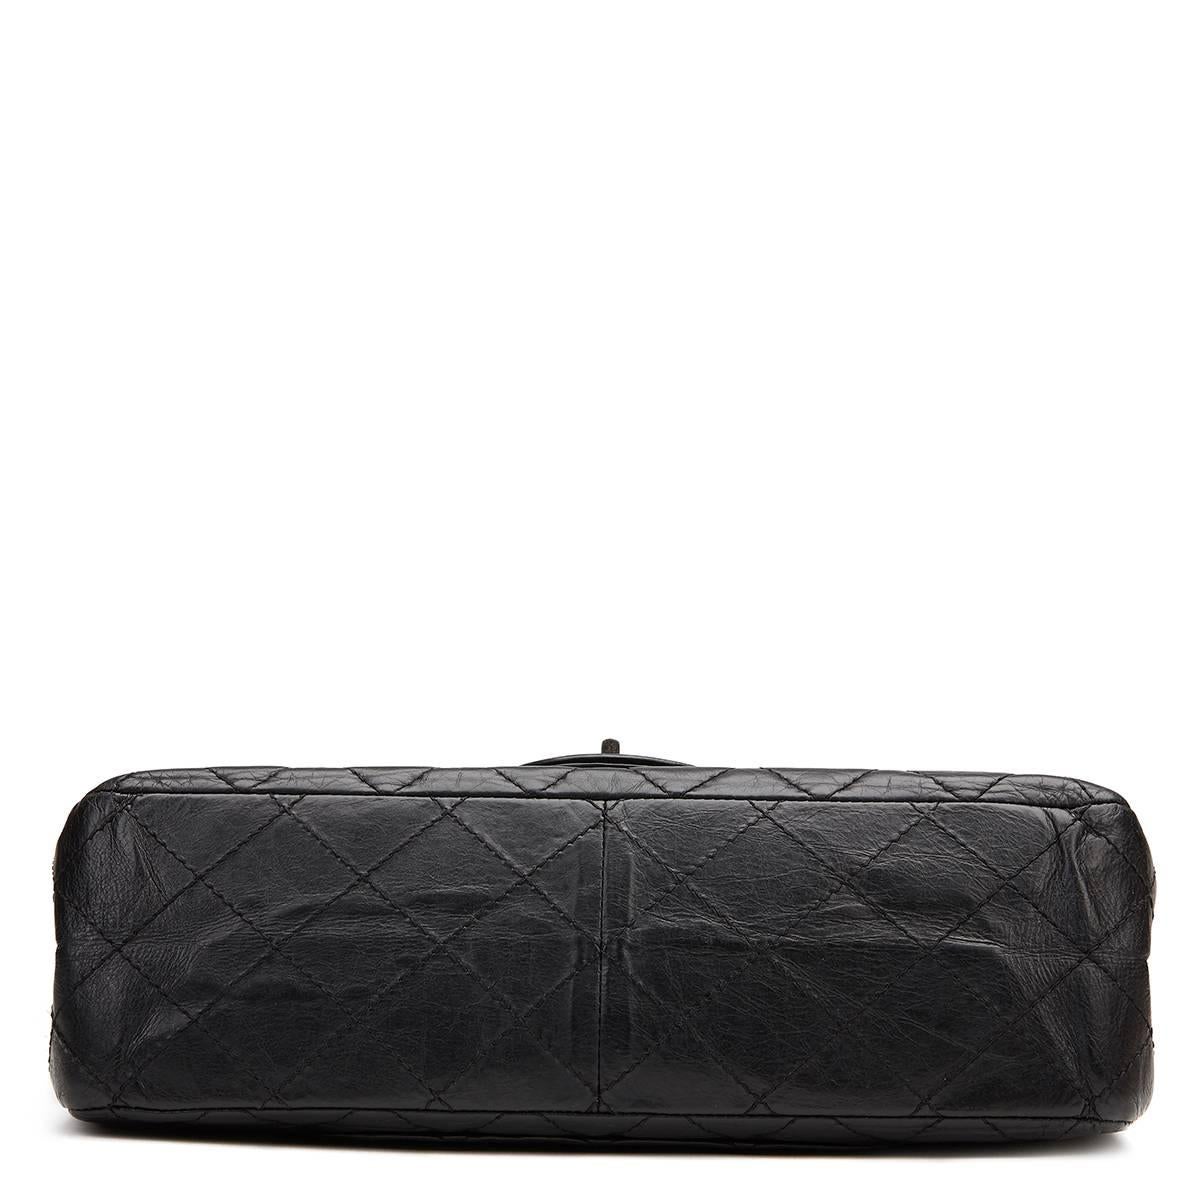 Women's 2008 Chanel Black Aged Calfskin 2.55 227 Reissue Flap Bag